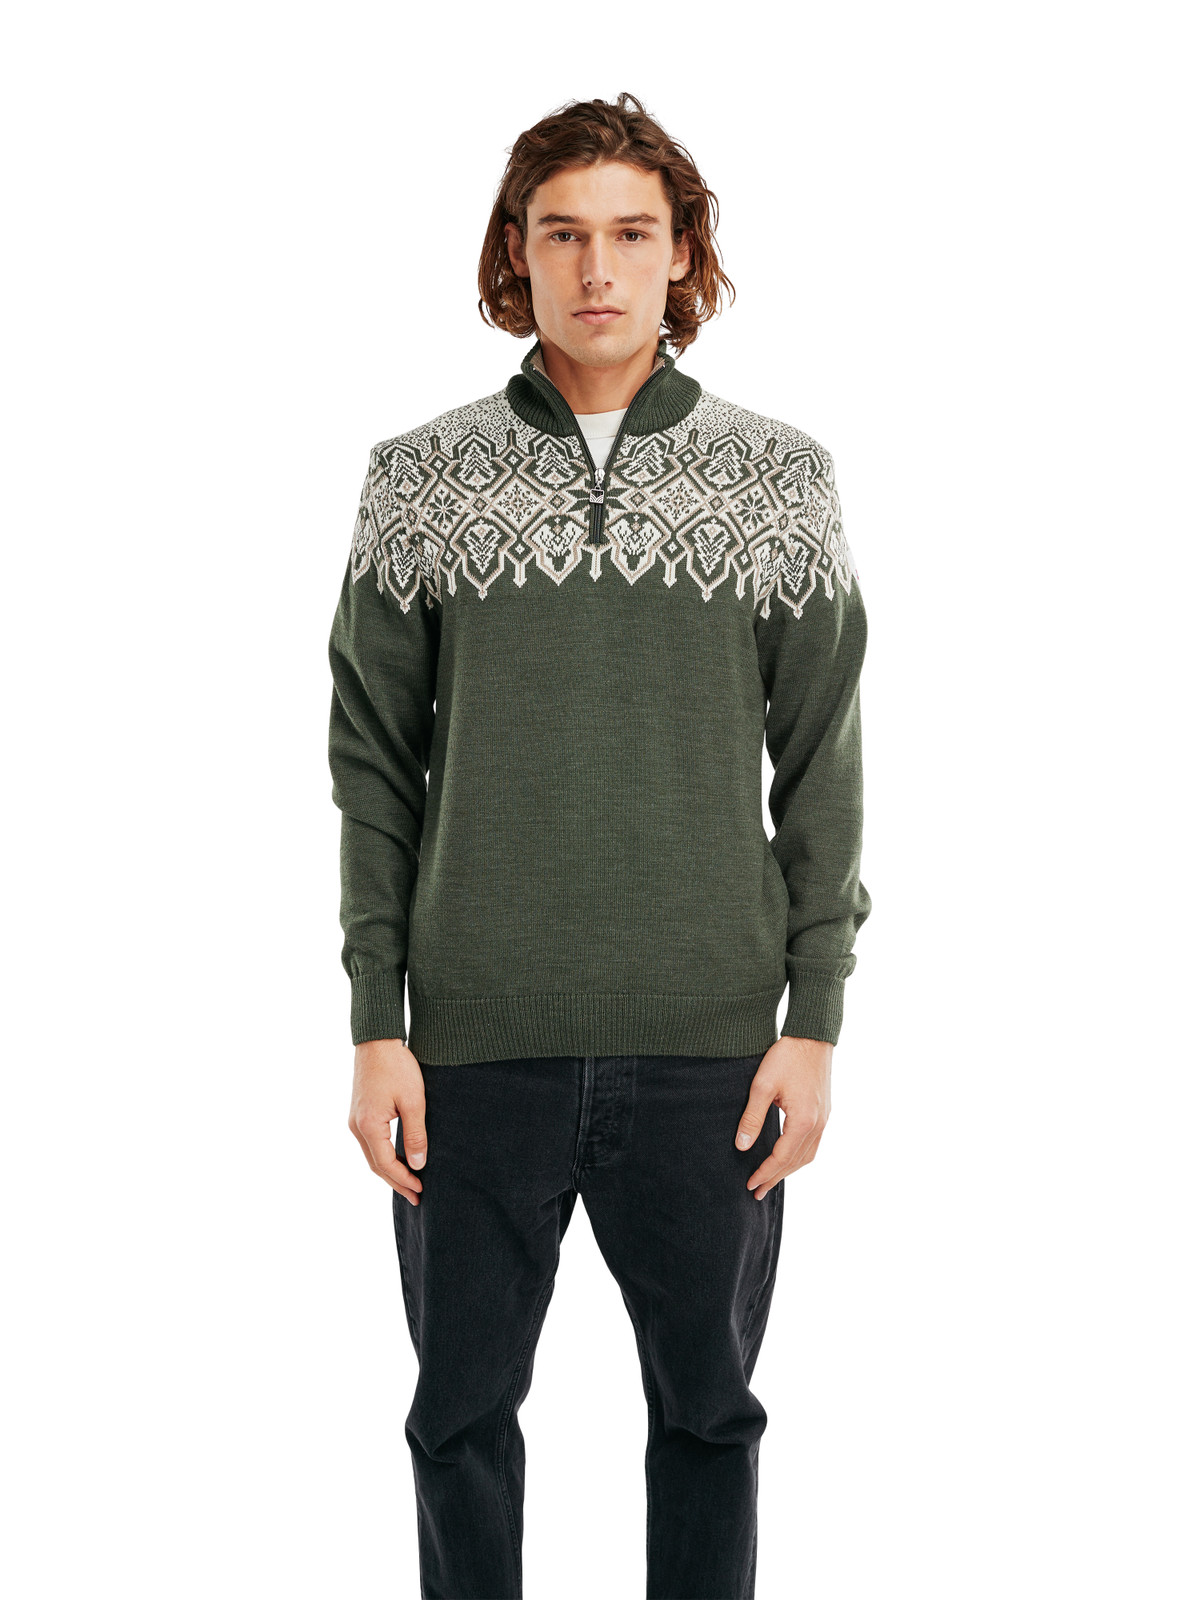 Dale of Norway Winterland Men's Sweater, Dark Green/Off White/Mountainstone, 95291-N00